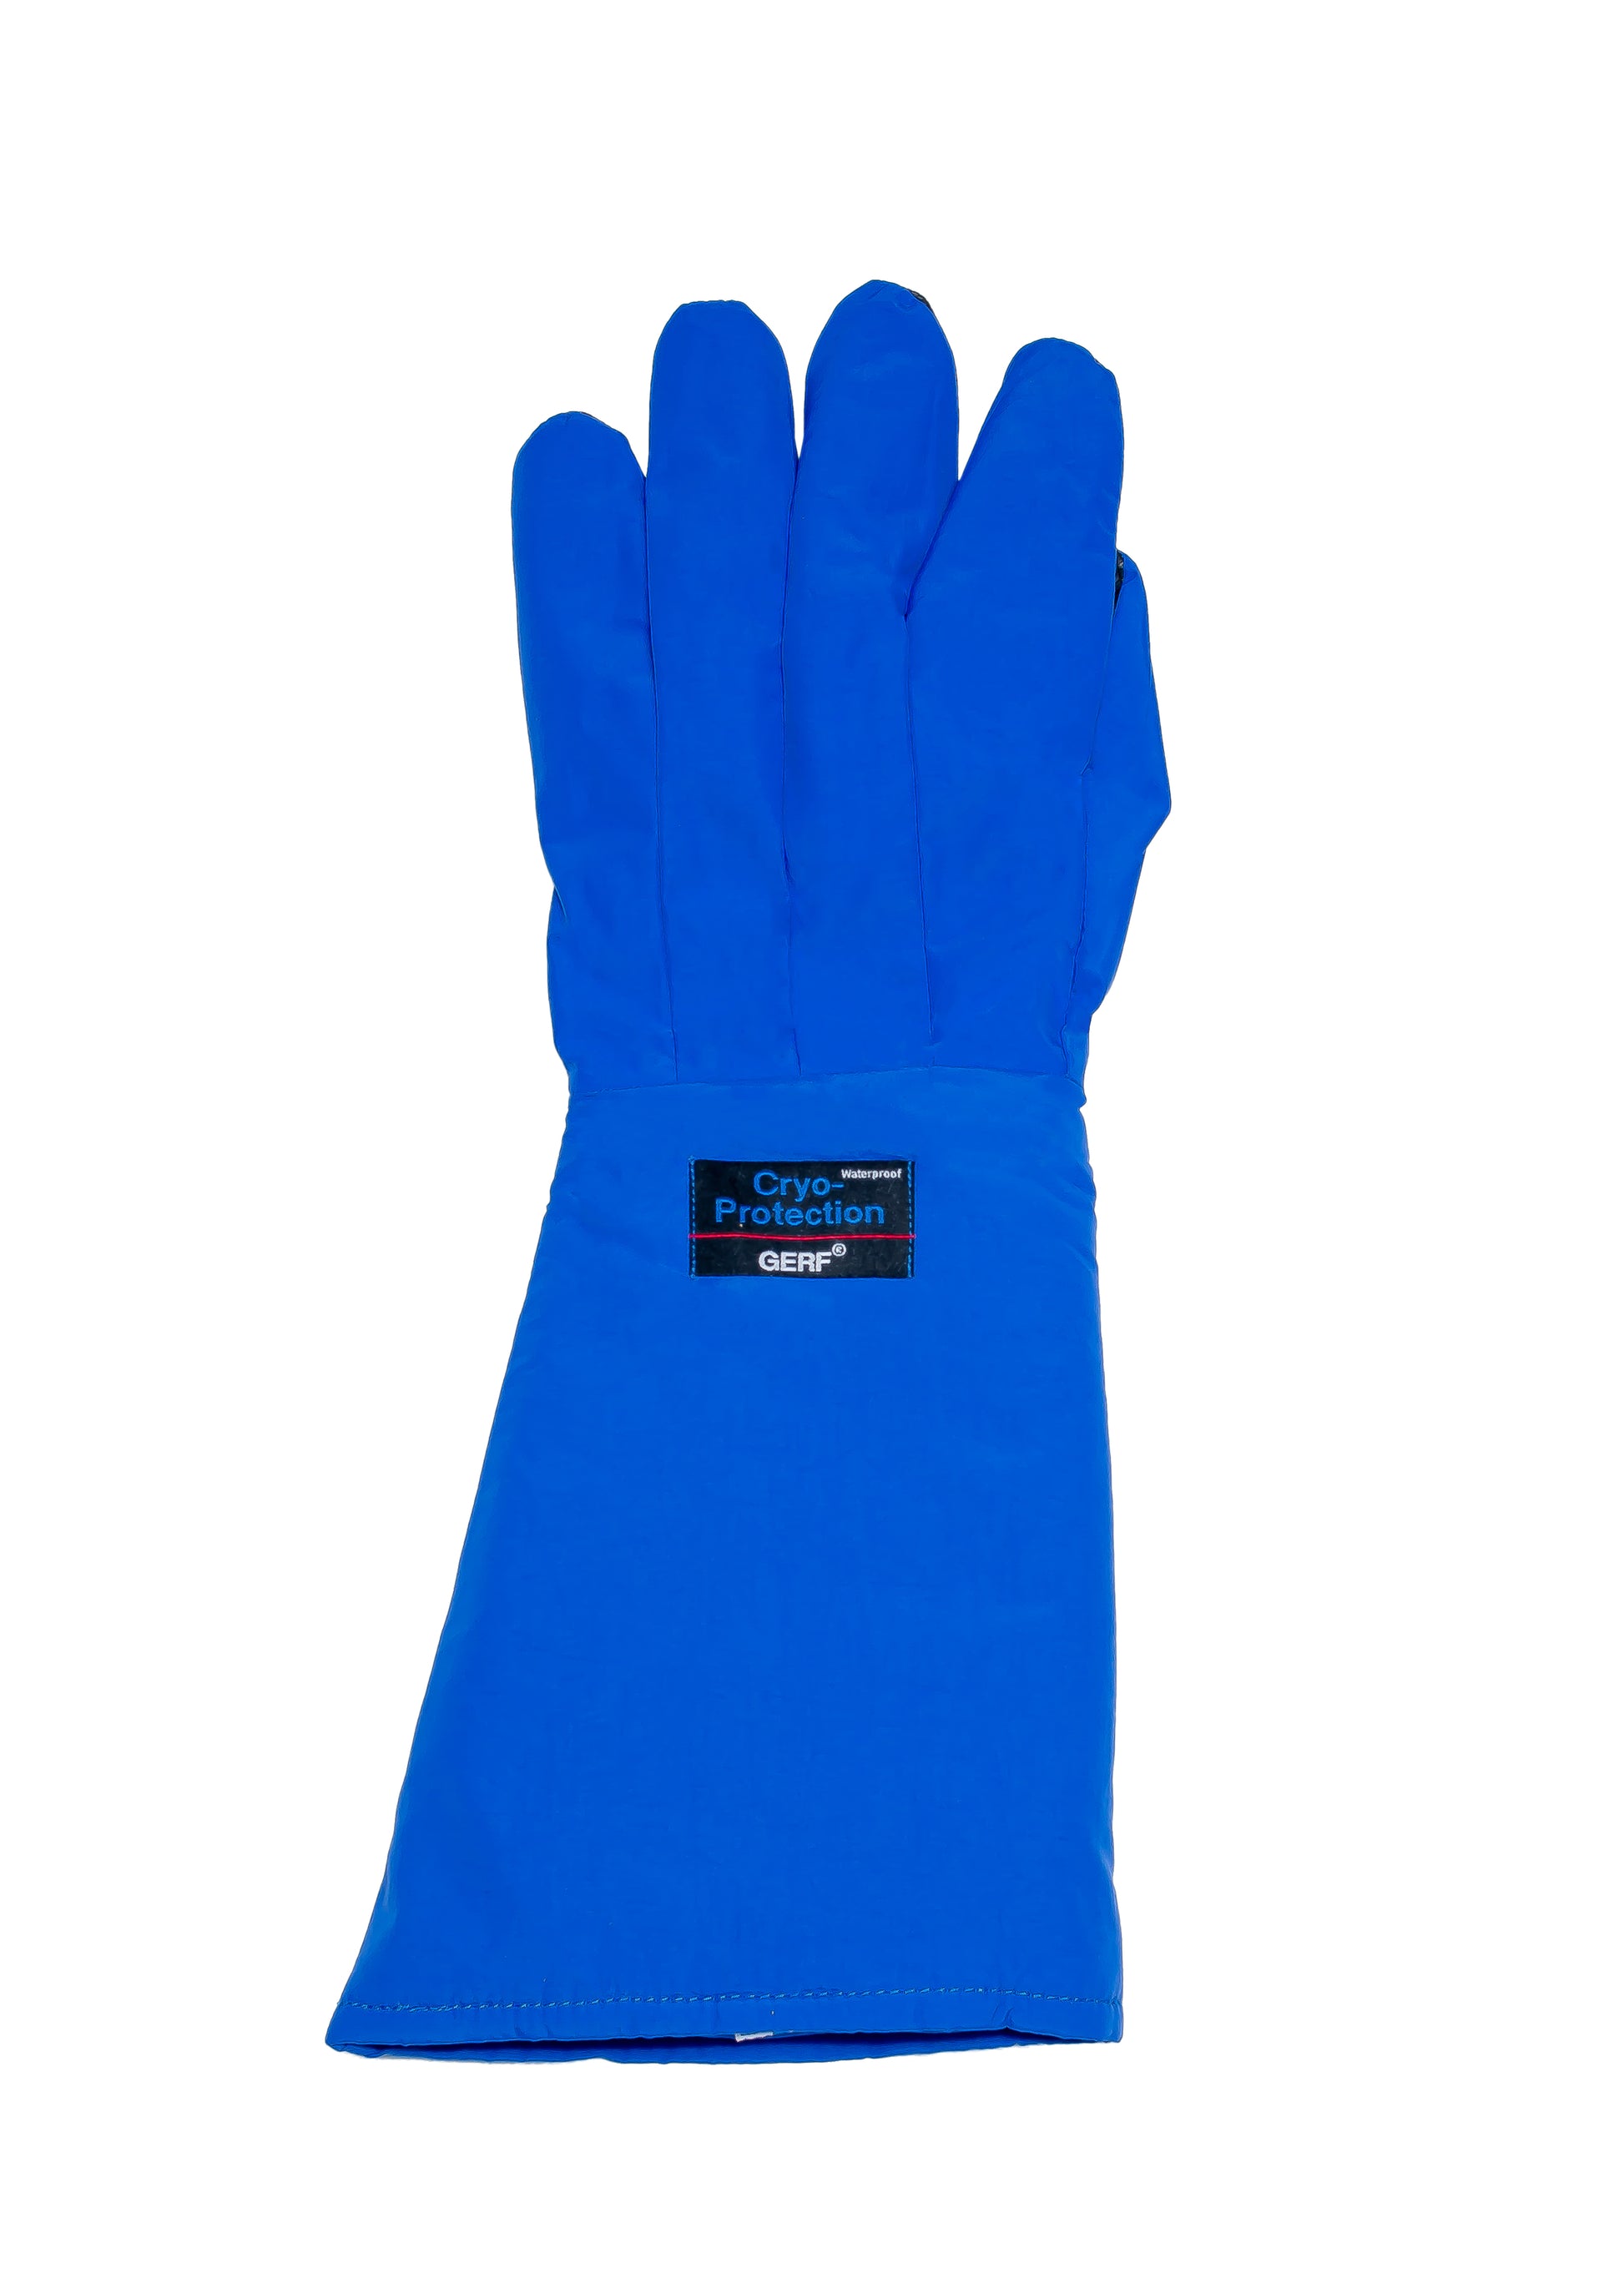 Cryo Gloves GRIP Before Elbow , guantes criogenicos reforzados, guantes criogenicos grip, guantes criogenicos cryo protection, guantes para nitrogeno liquido, guantes para oxigeno liquido, guantes para hielo seco, guantes para helio